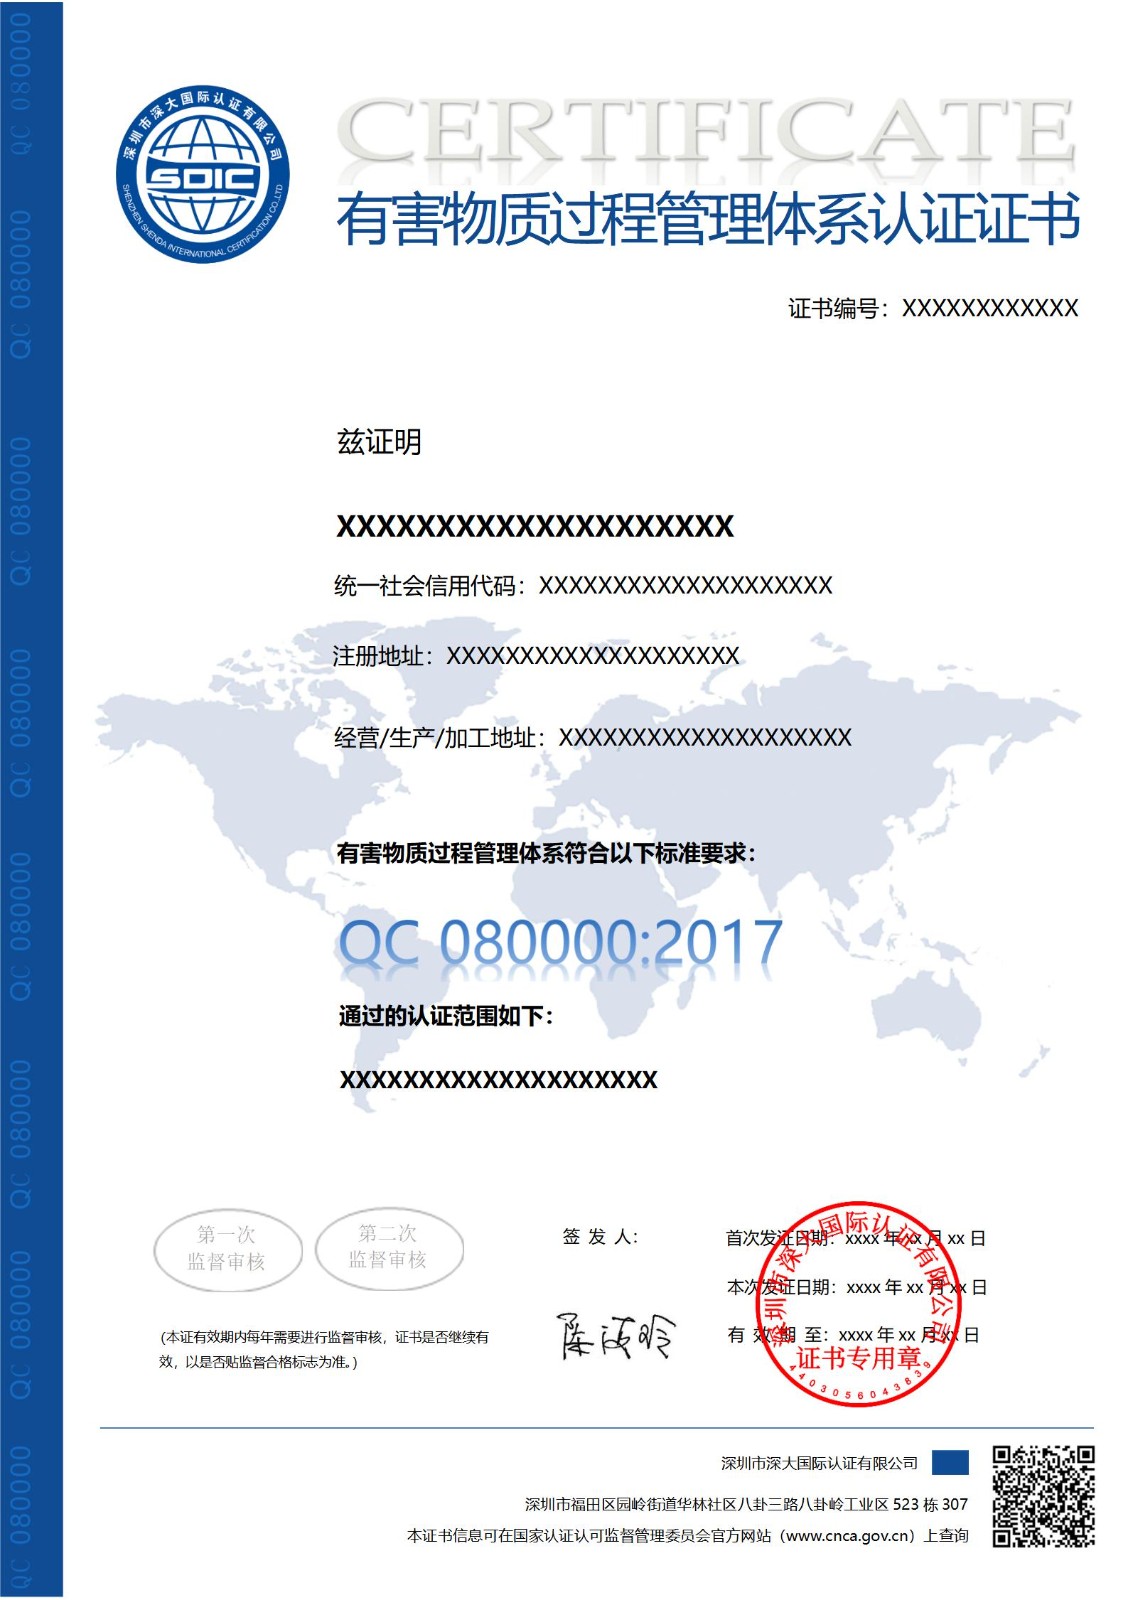 QC 080000:2017 有害物质过程管理体系认证